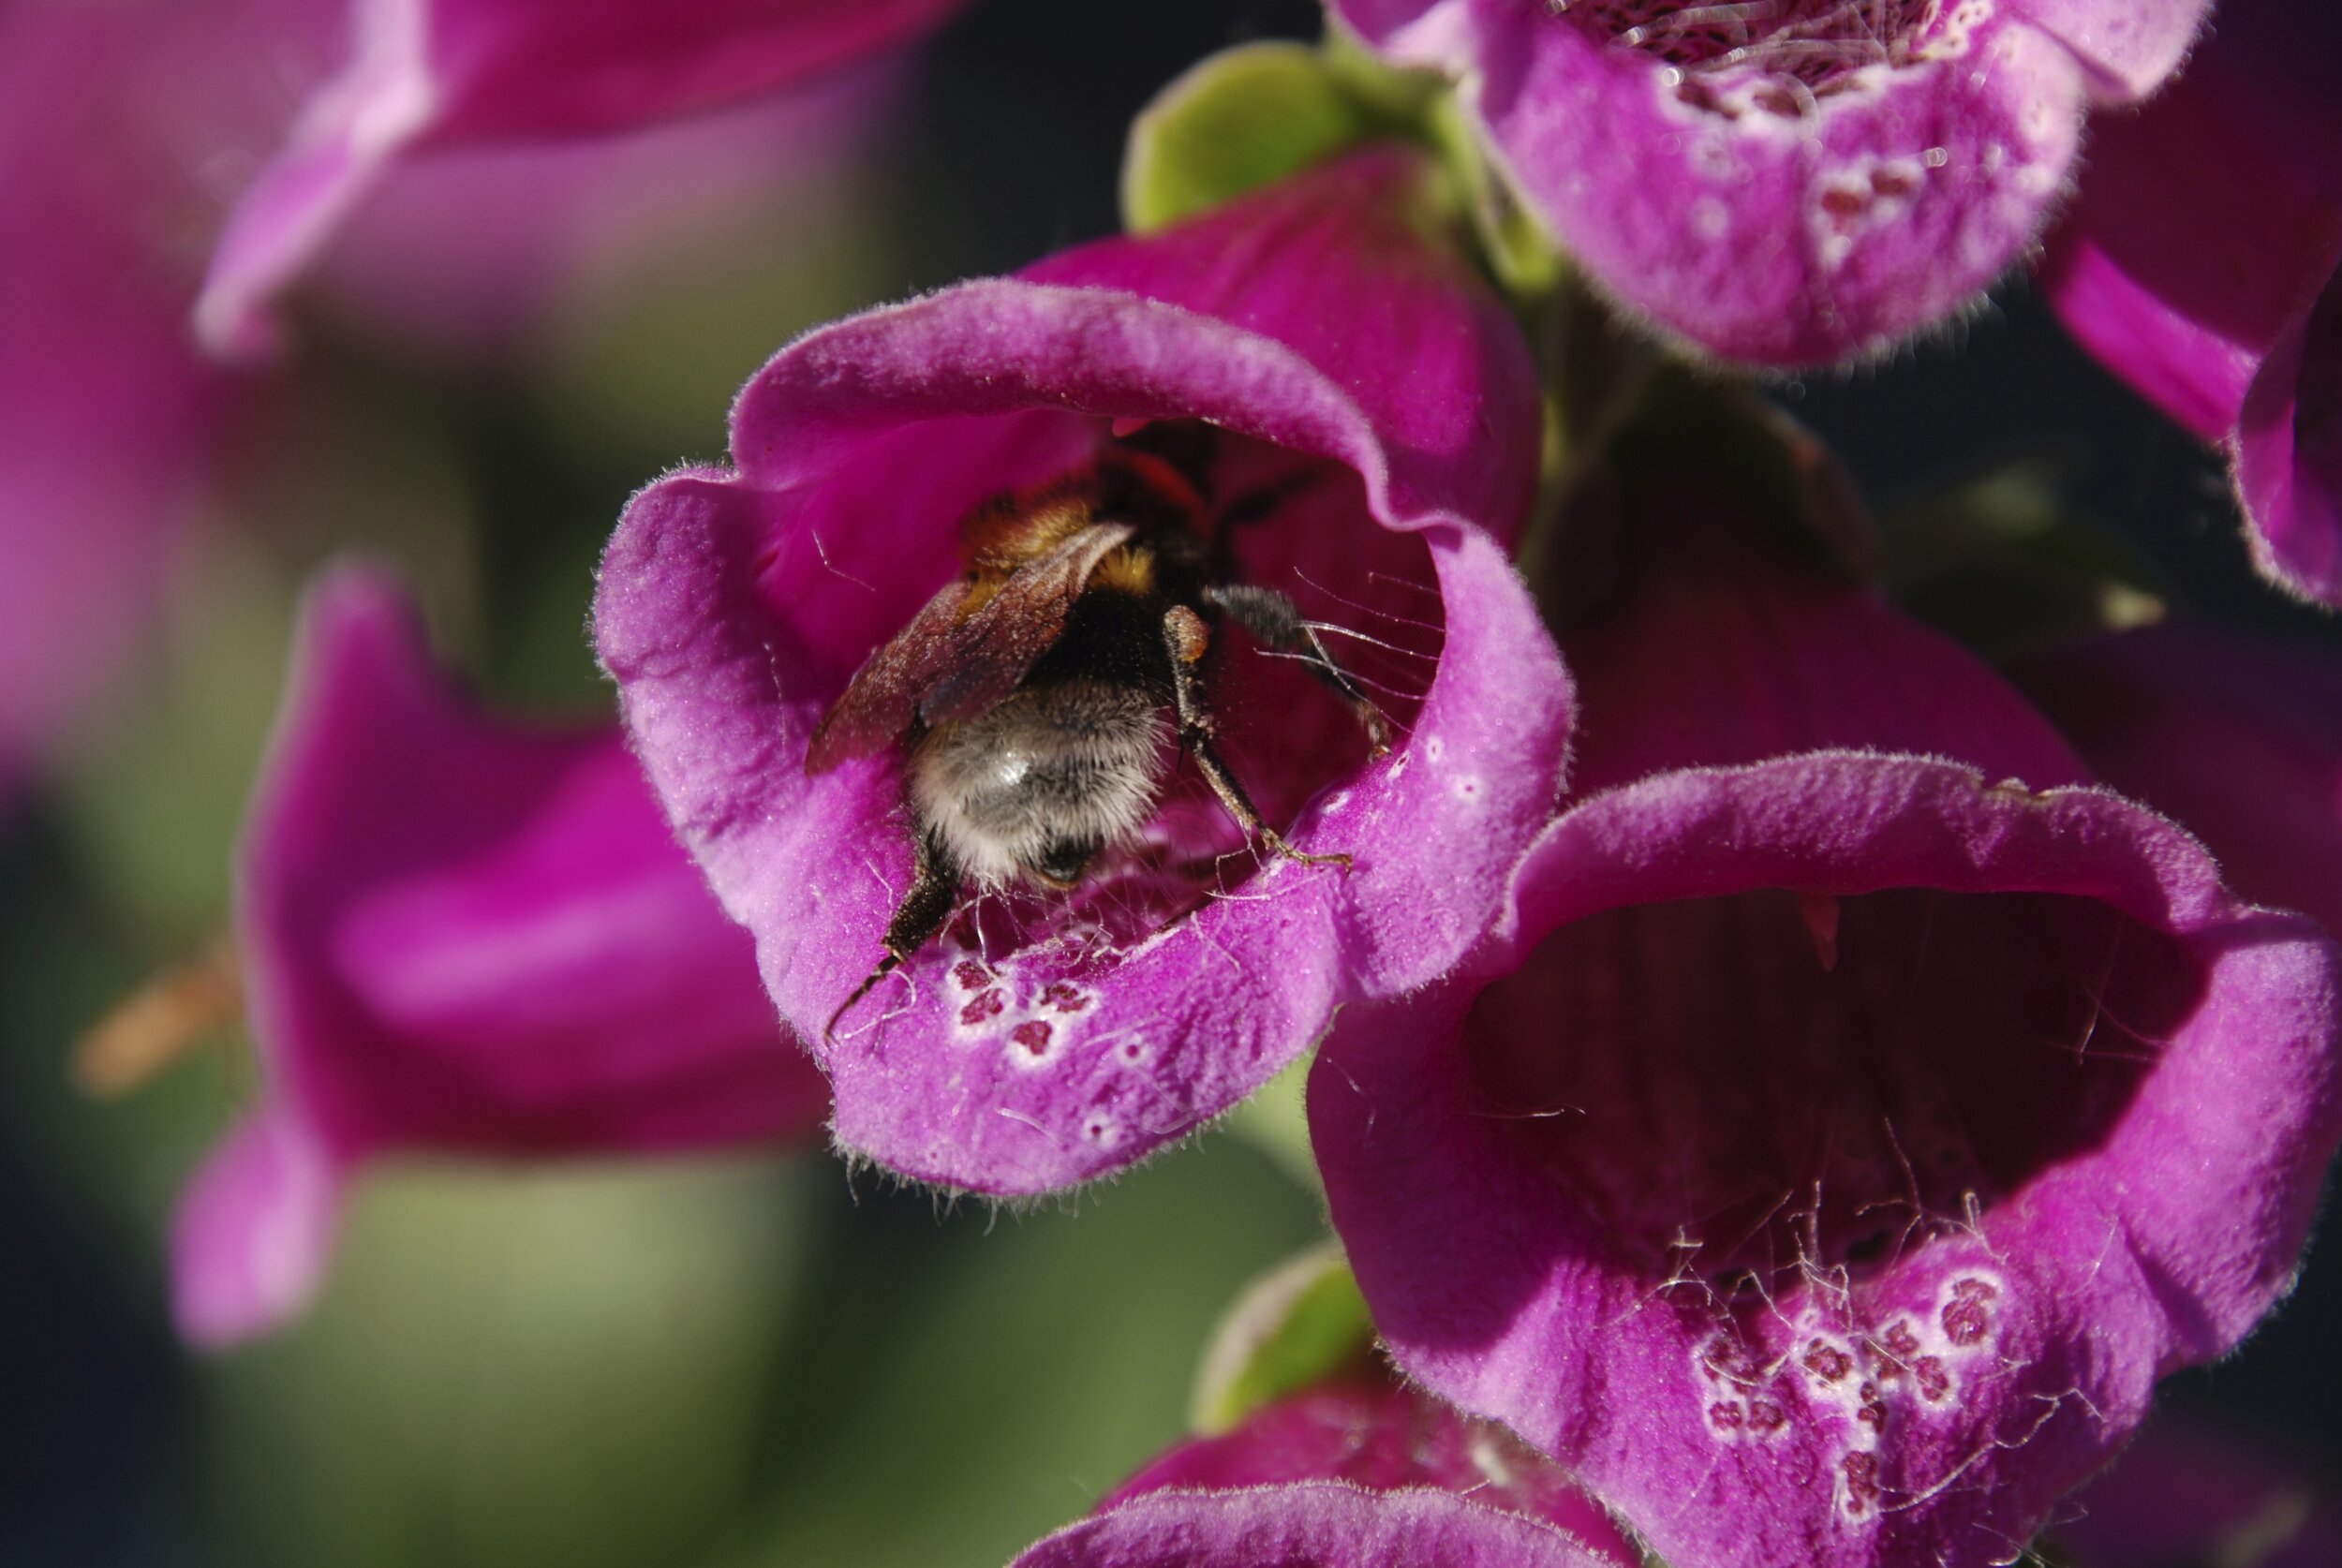   tuinhommel  / garden bumble bee /  Bombus hortorum   op  Digitalis purpurea  